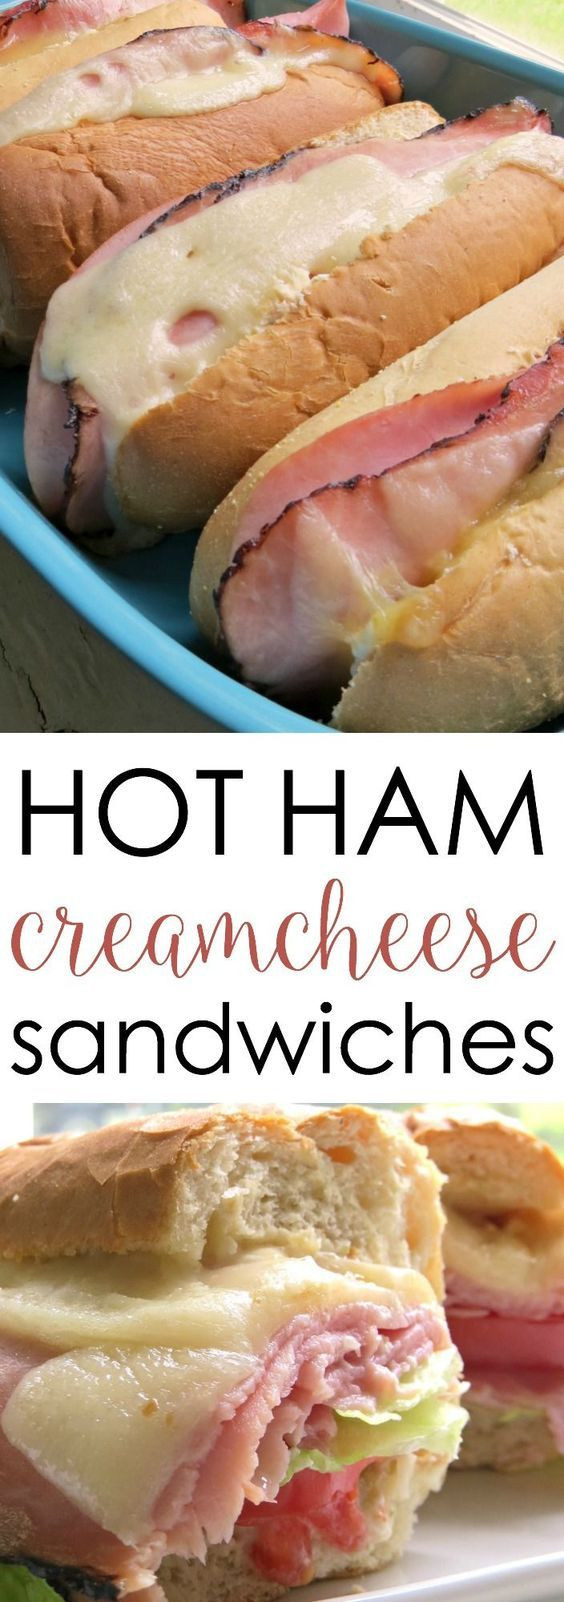 Hot Ham Sandwich Recipes
 Hot Ham and Cheese Sandwiches Recipe